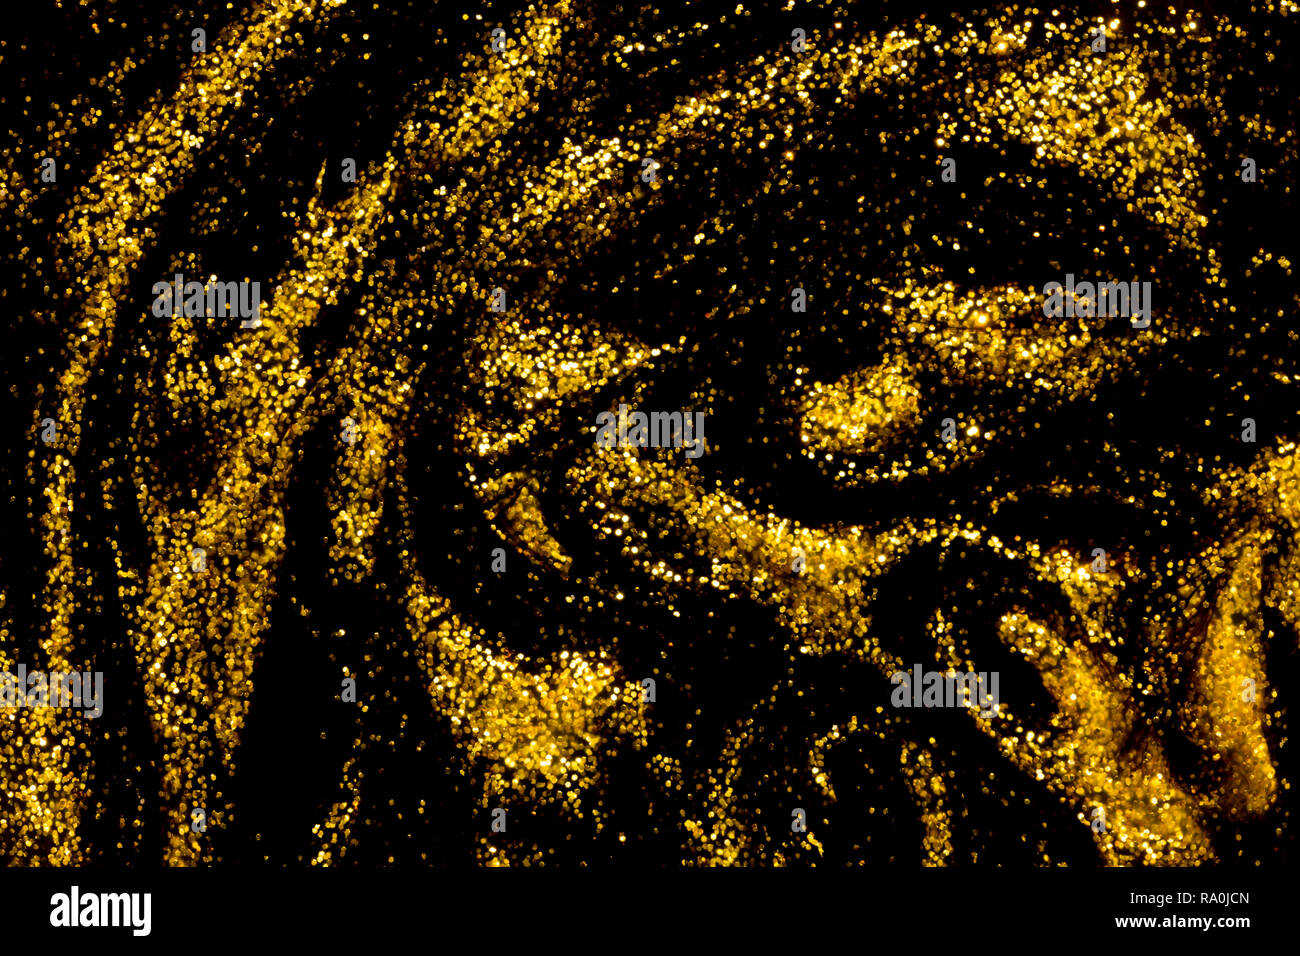 Abstract background of black and gold metallic glitter paint swirls Stock Photo